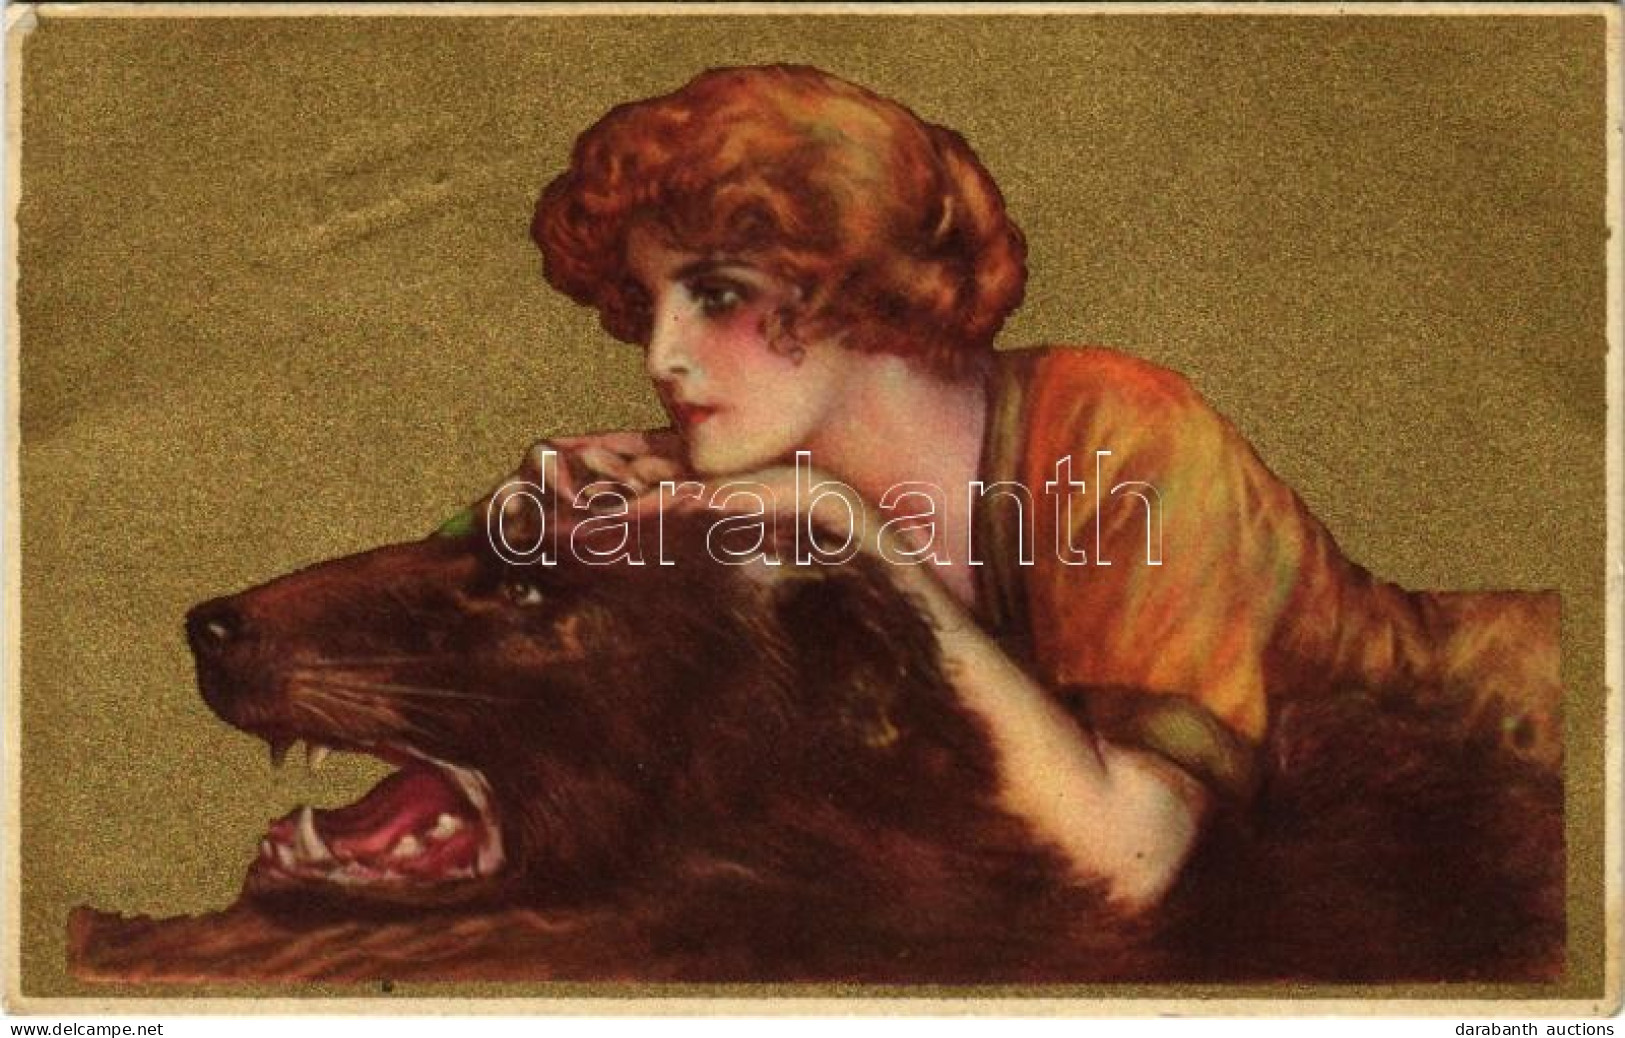 T2/T3 1922 Lady With Bear. Italian Golden Art Postcard. Anna & Gasparini 101-4. Unsigned Corbella (EK) - Unclassified